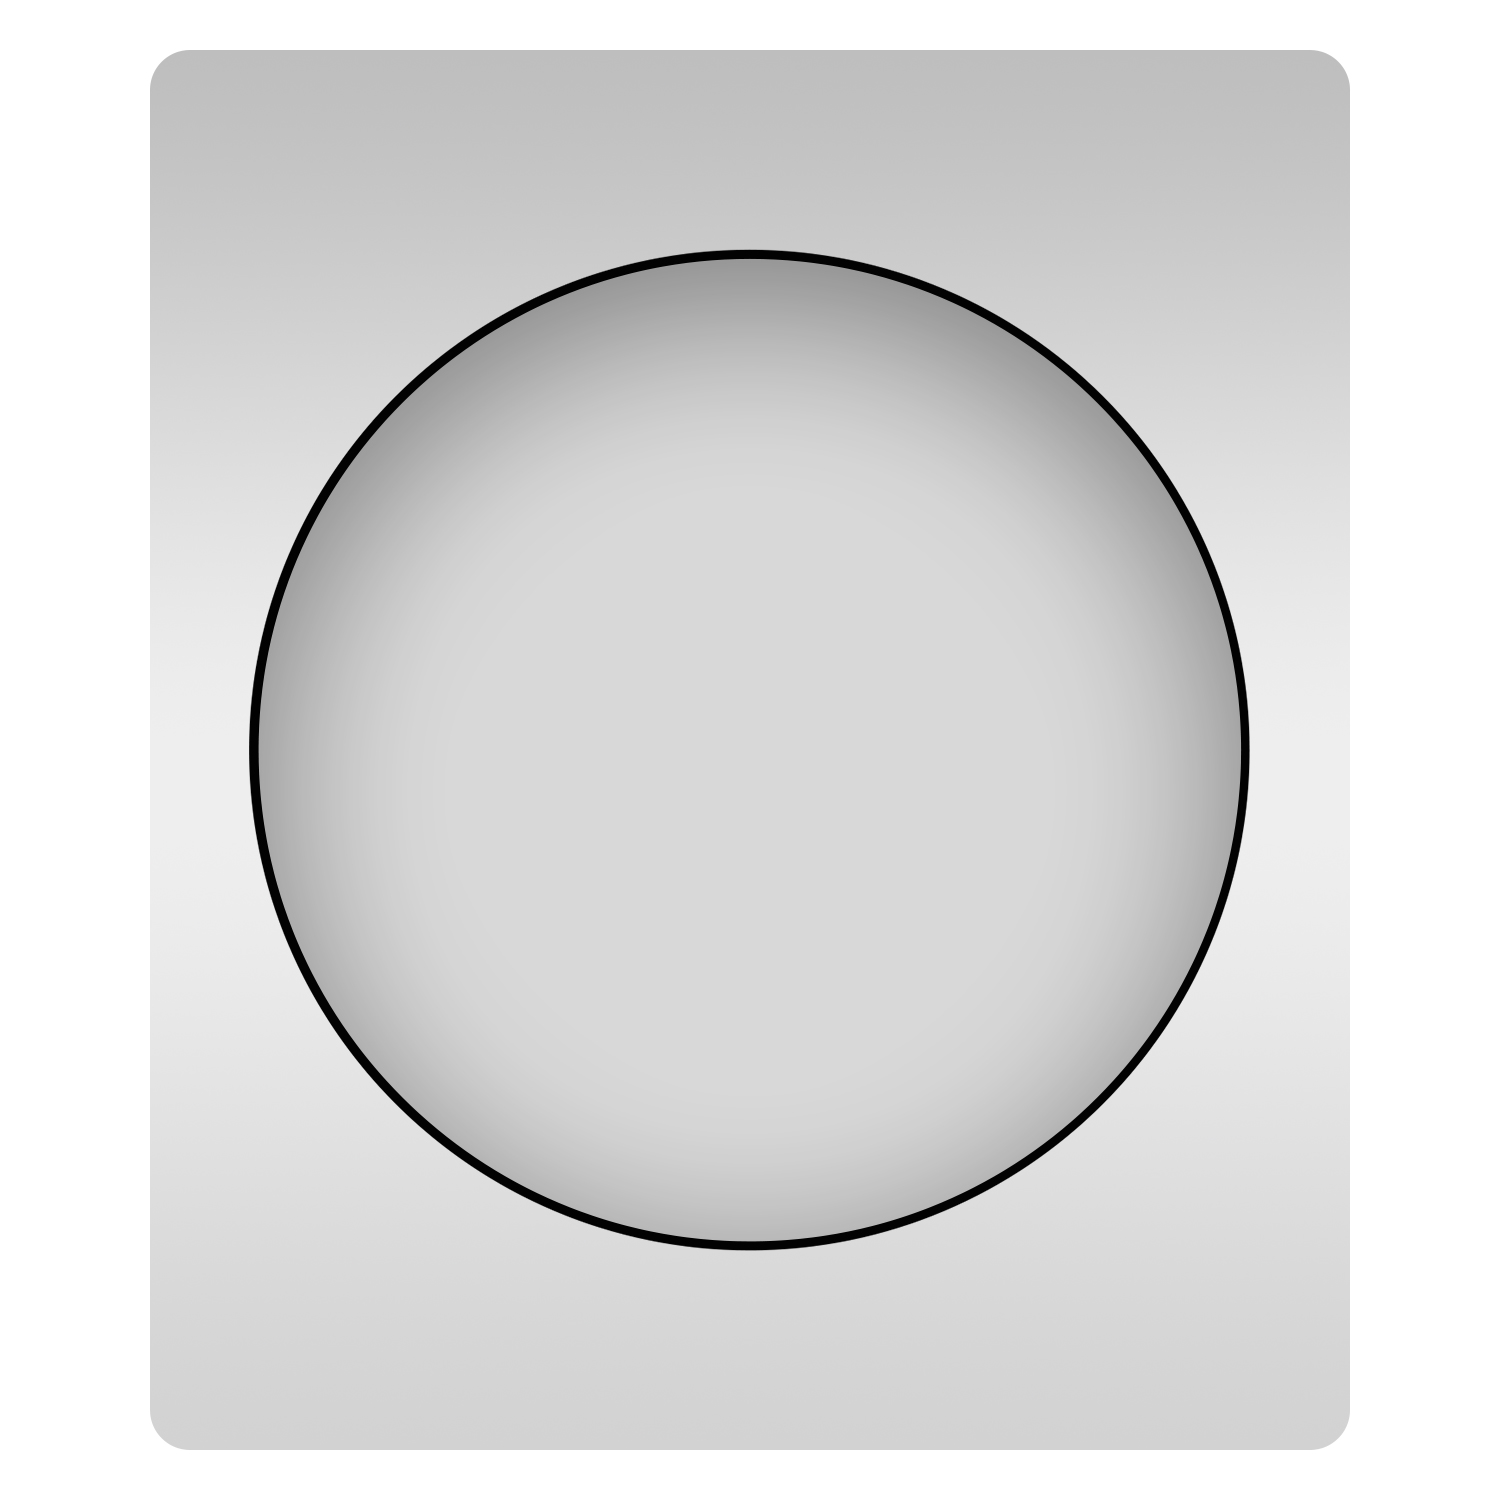 Влагостойкое круглое зеркало Wellsee 7 Rays' Spectrum 172200030, 65 см